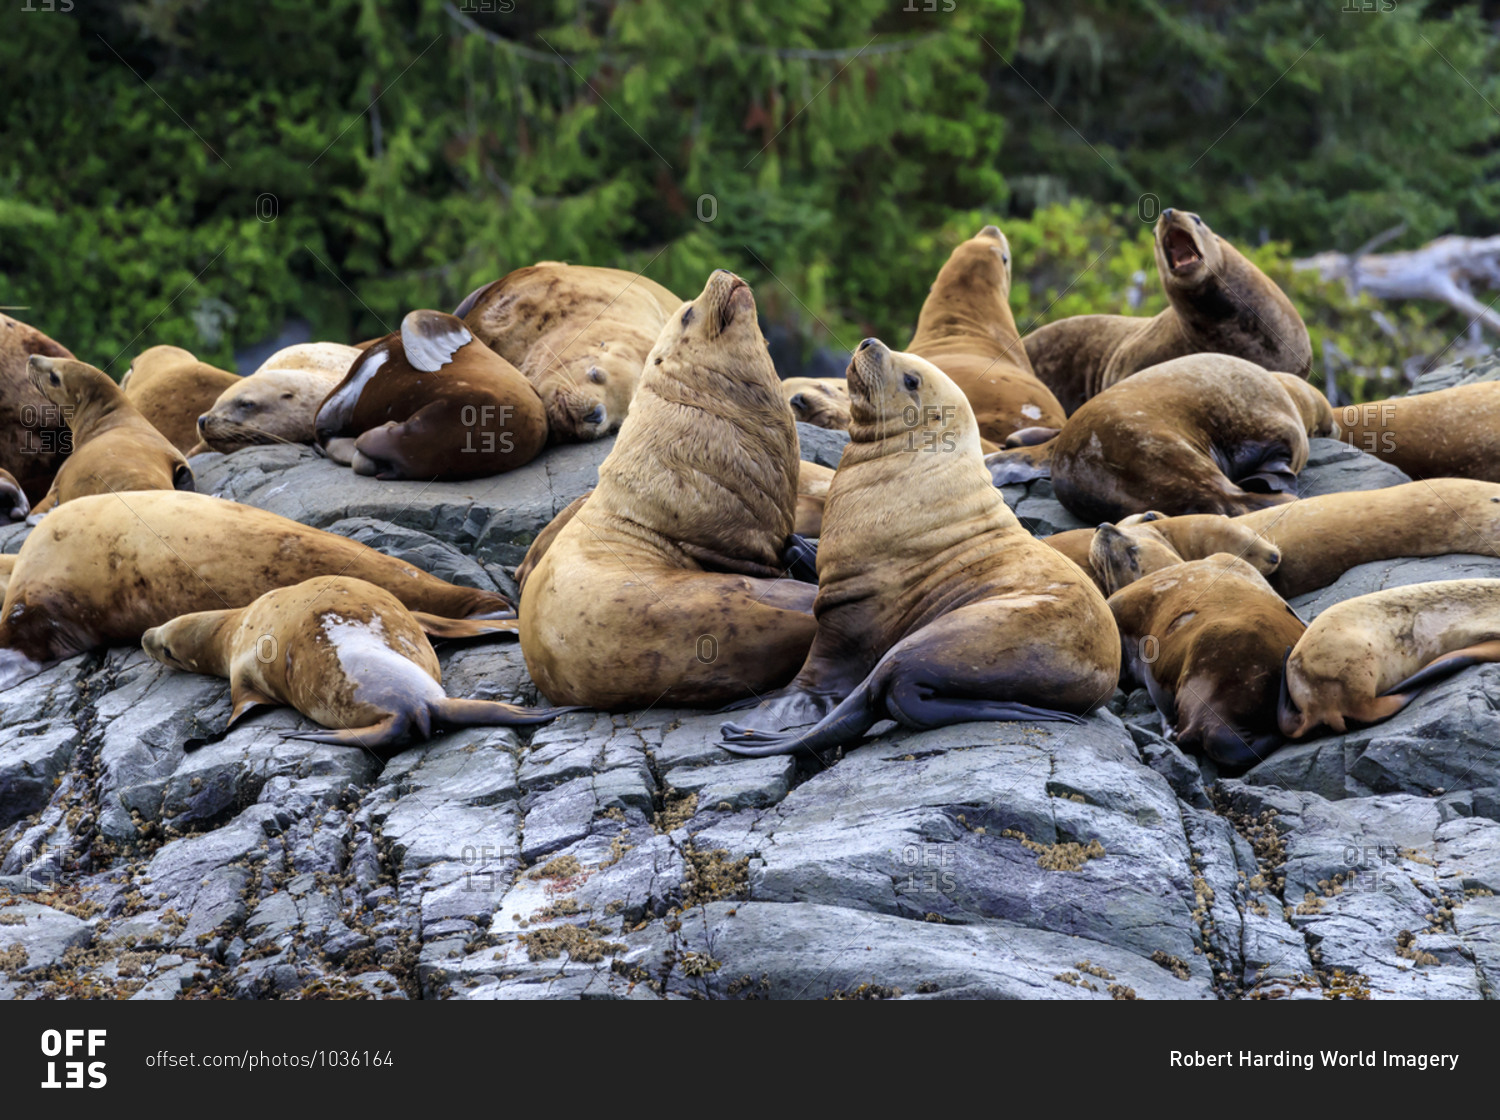 Steller sea lions (Eumetopias jubatus) on a rocky shore, Alert Bay, Inside Passage, British Columbia, Canada, North America